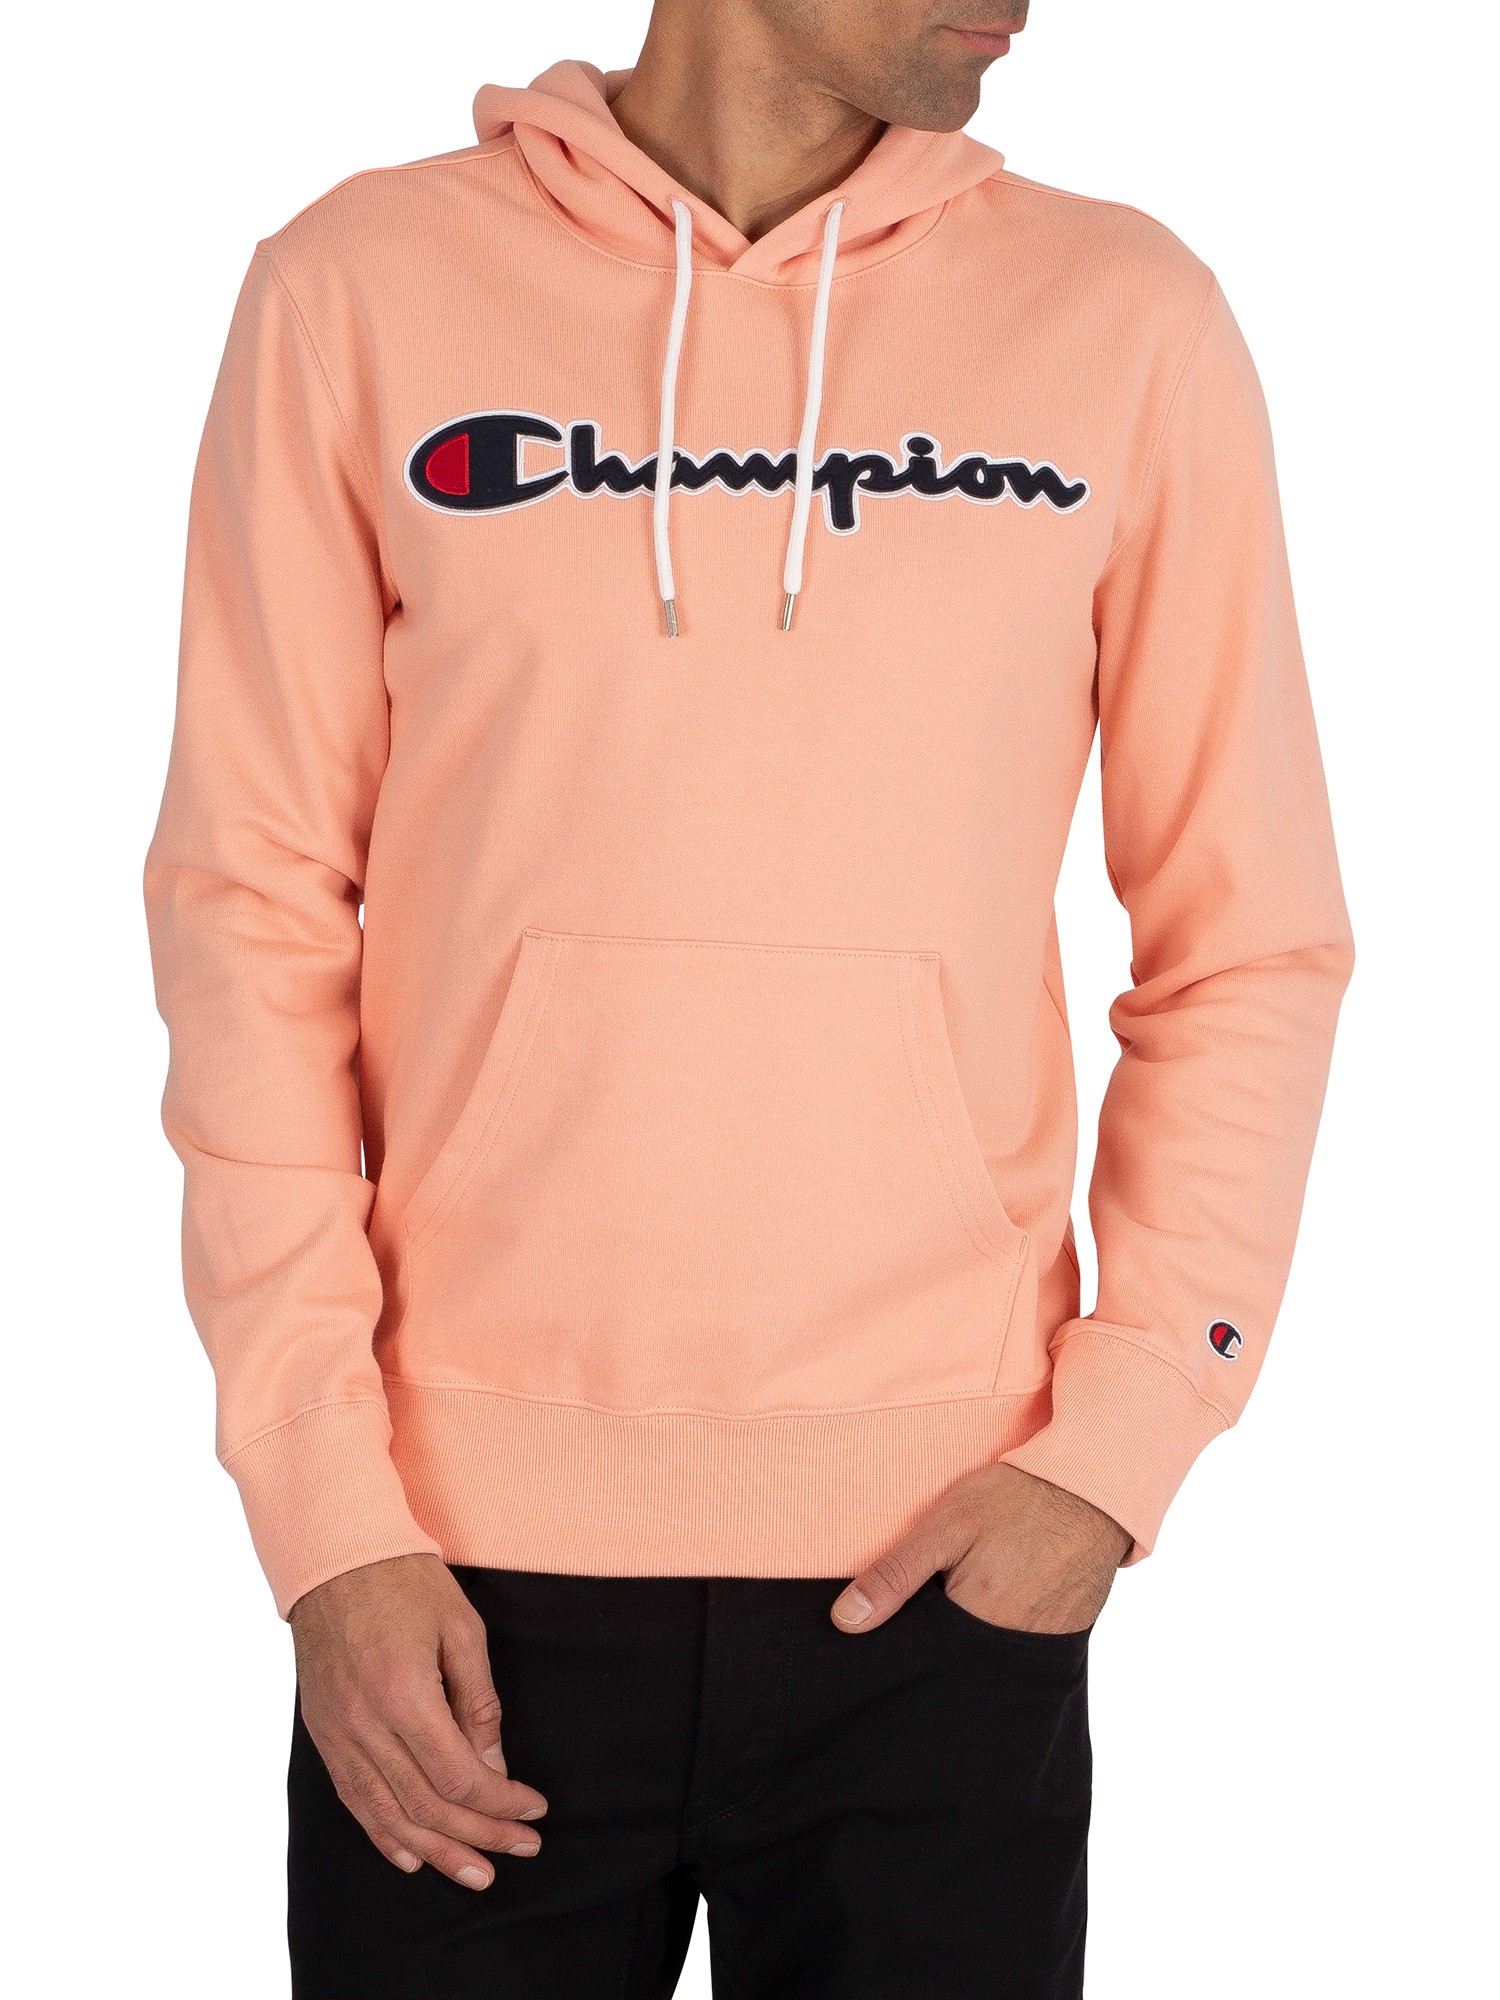 mens champion pink sweatshirt